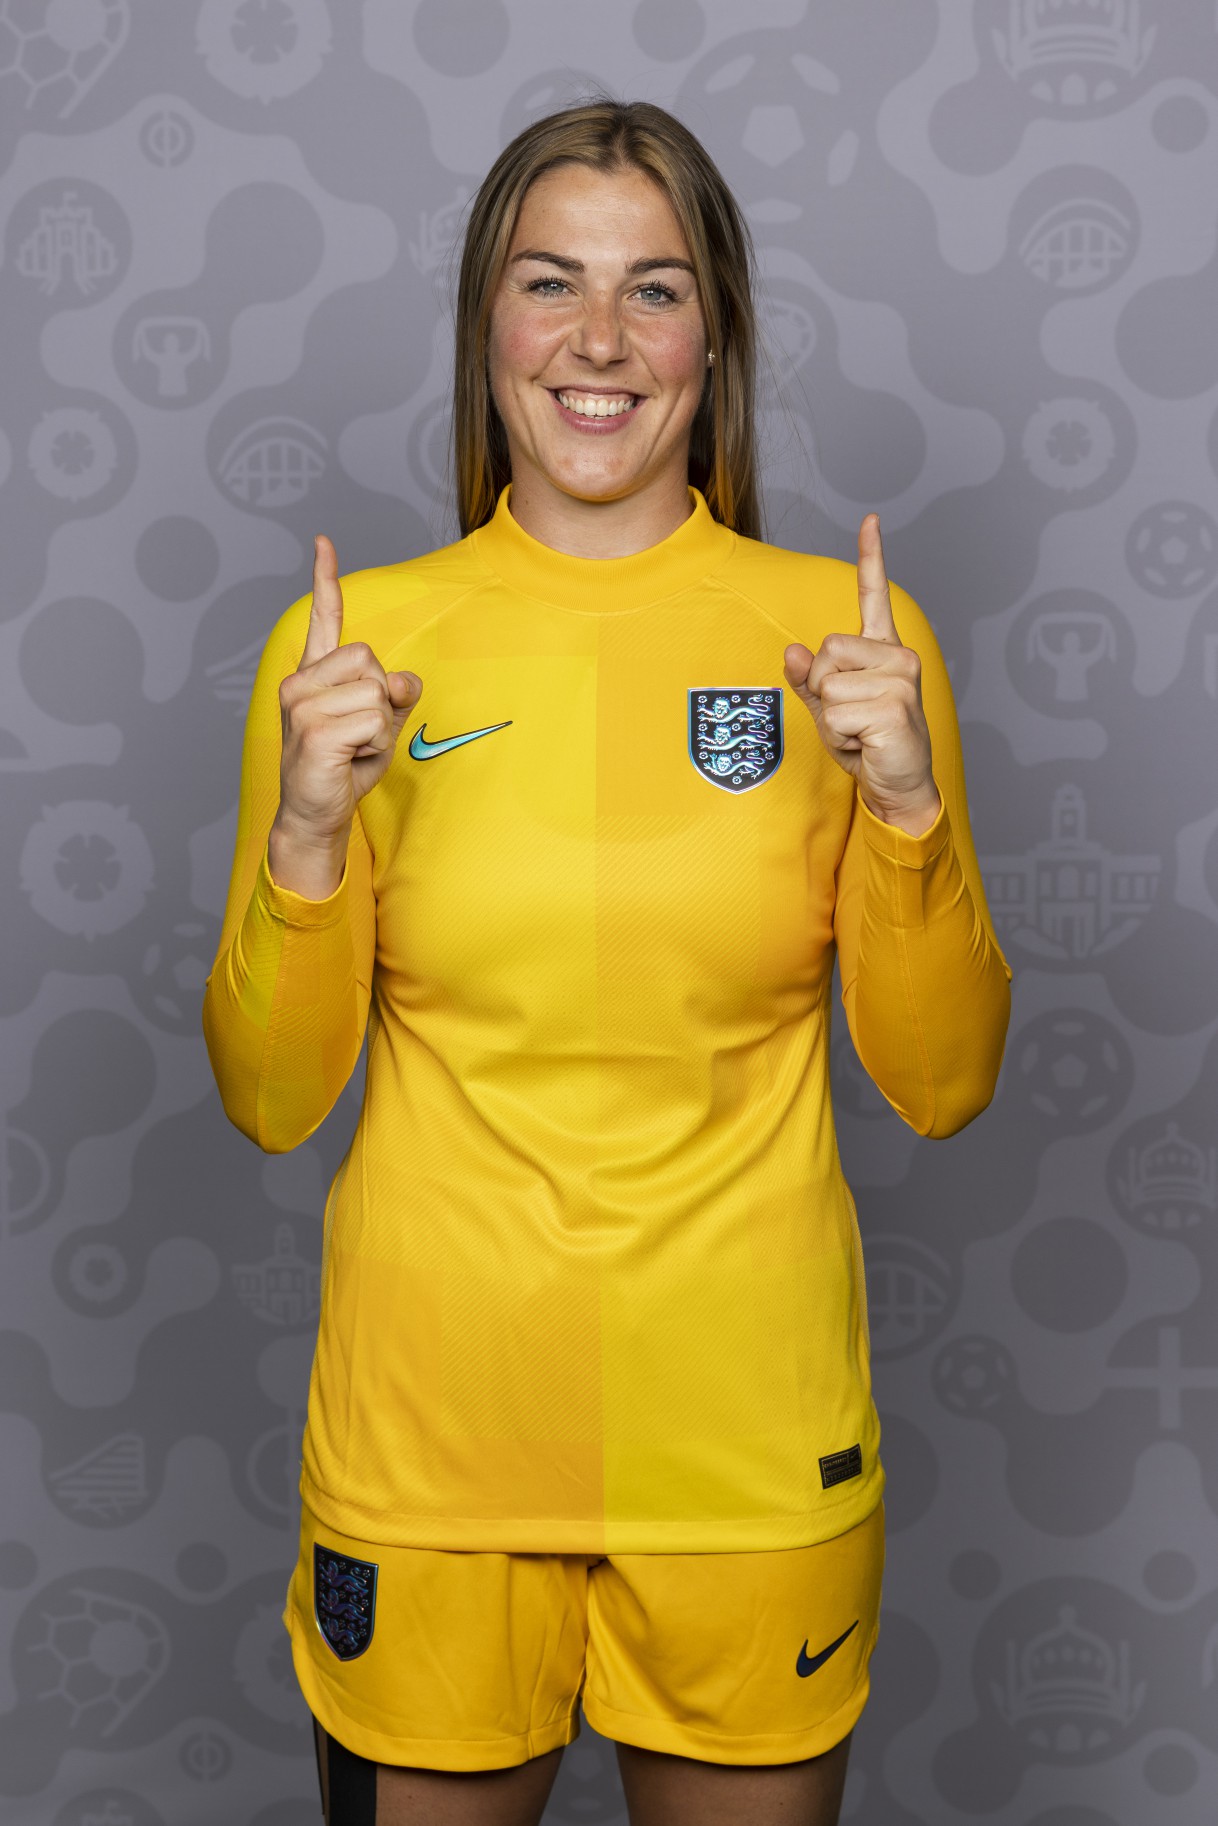 Who is England goalkeeper Mary Earps?